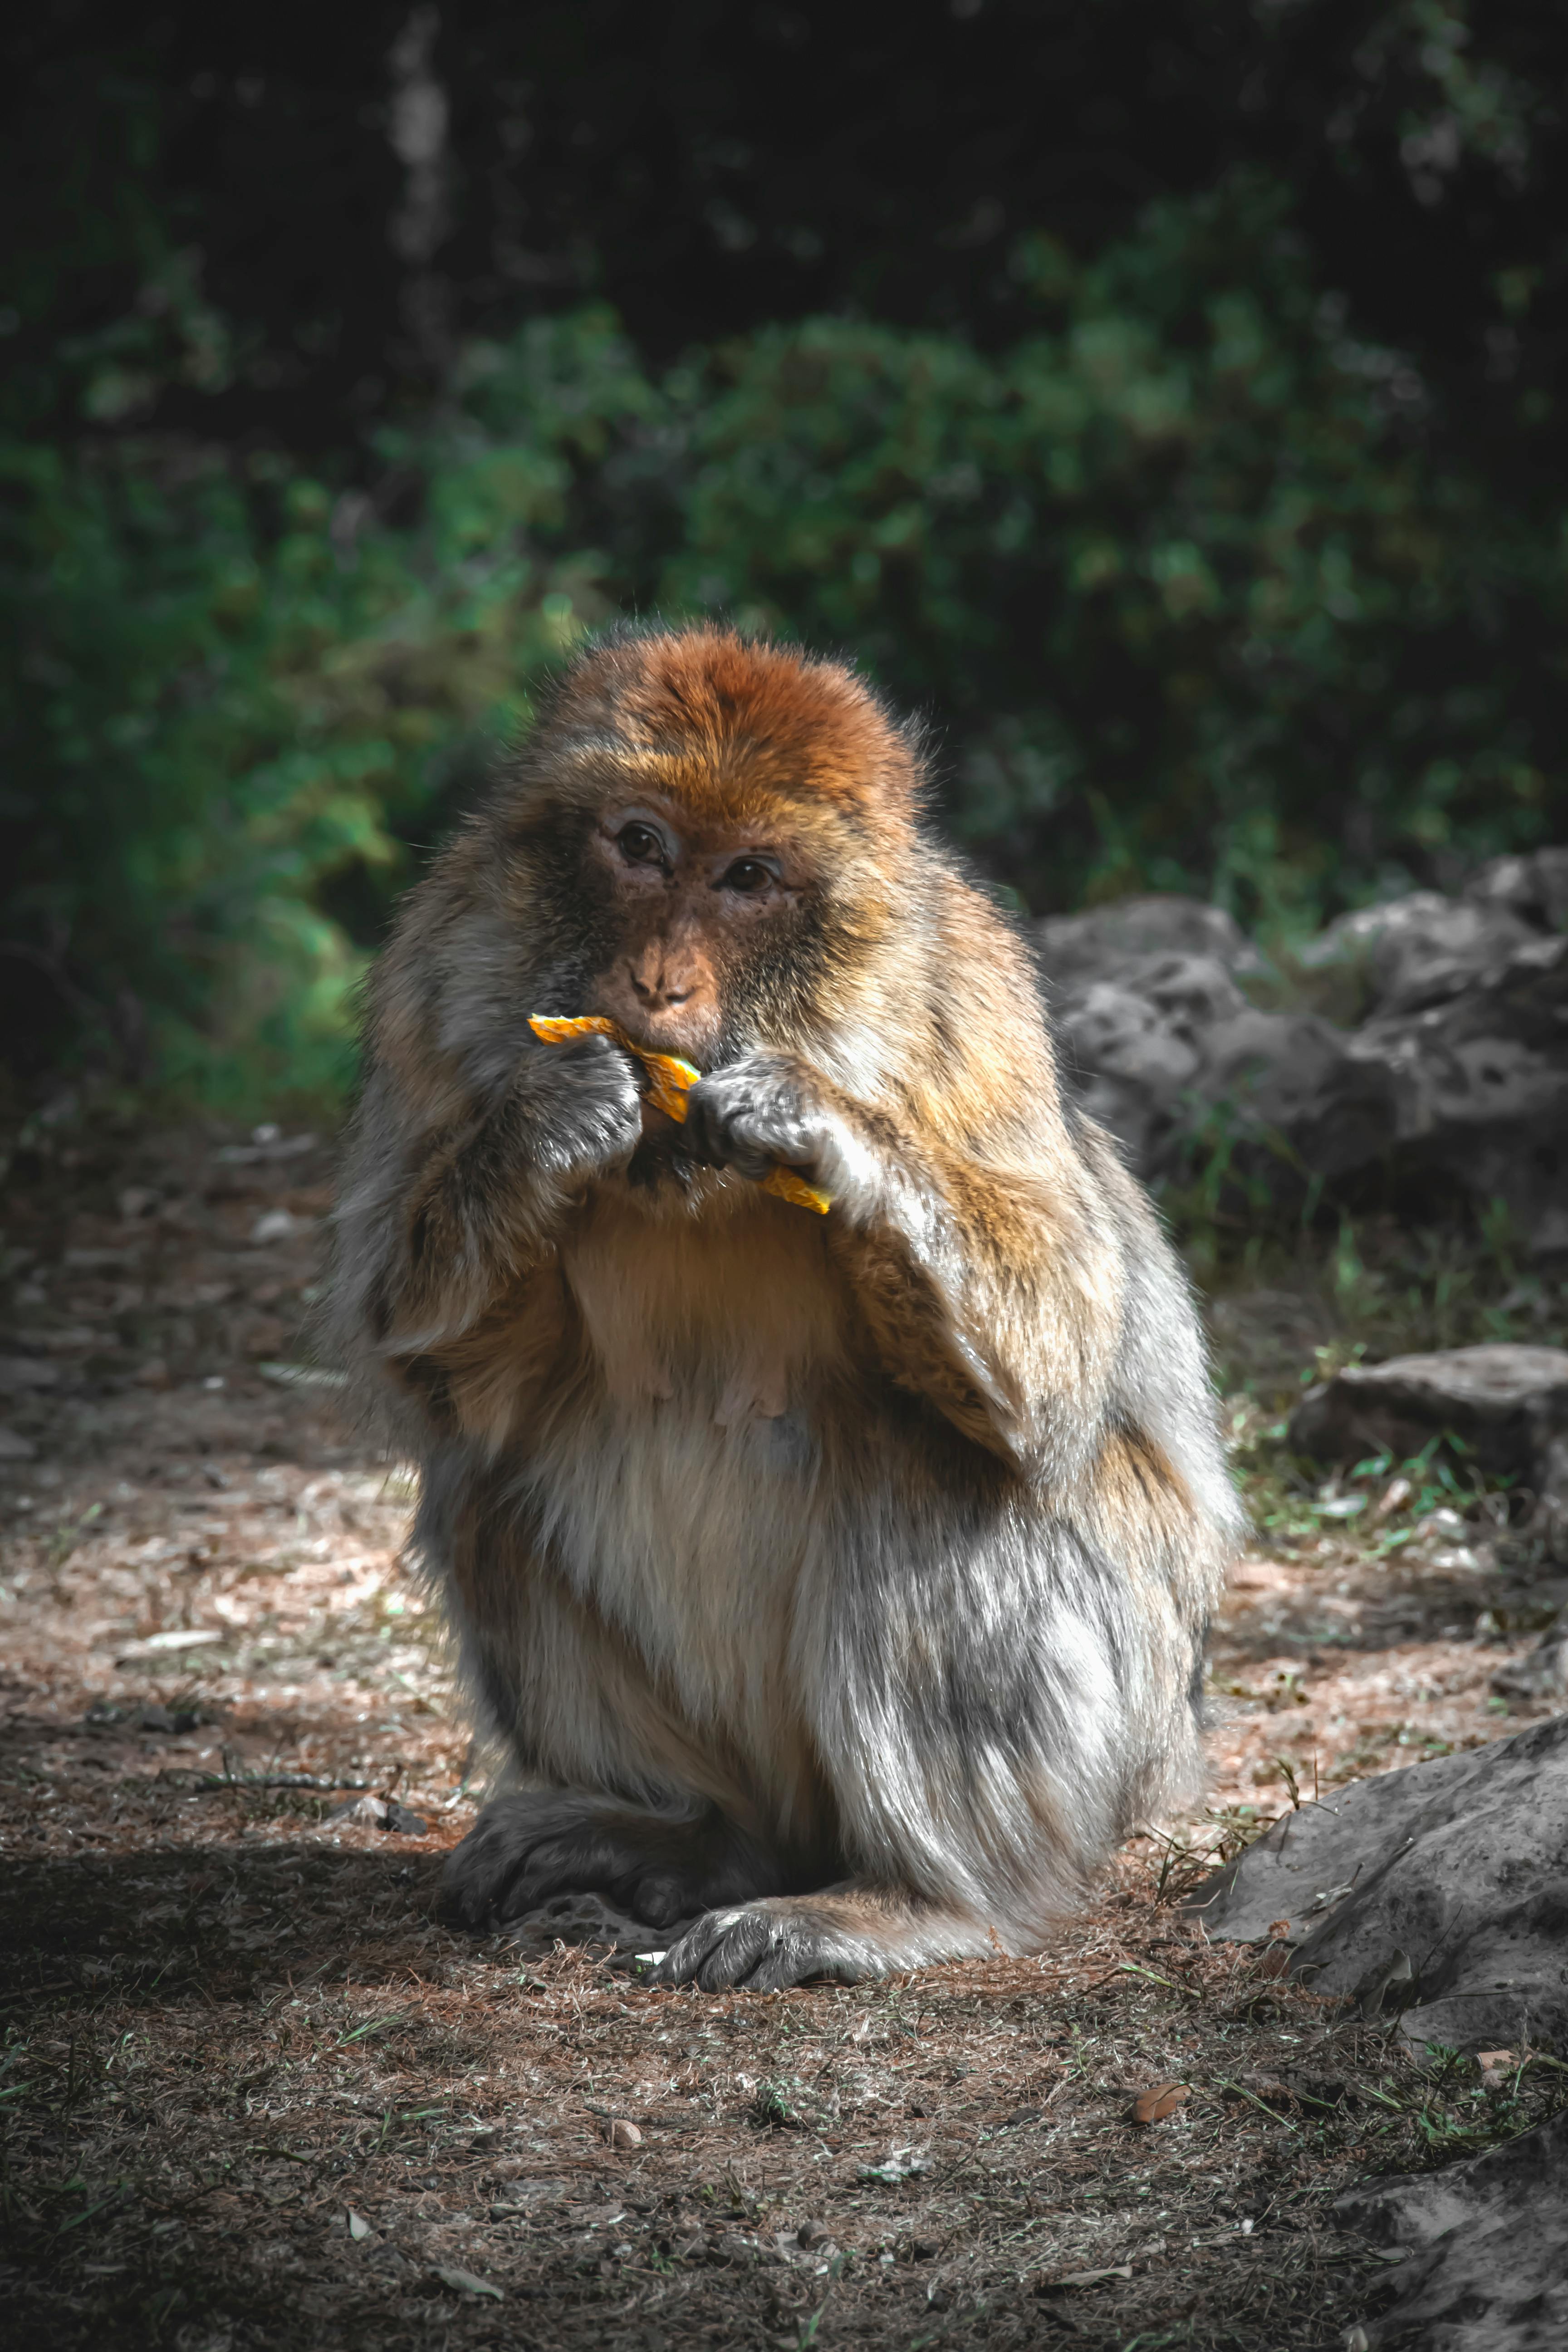 A close up of a monkey sitting on a rock photo – Free Monkeys Image on  Unsplash